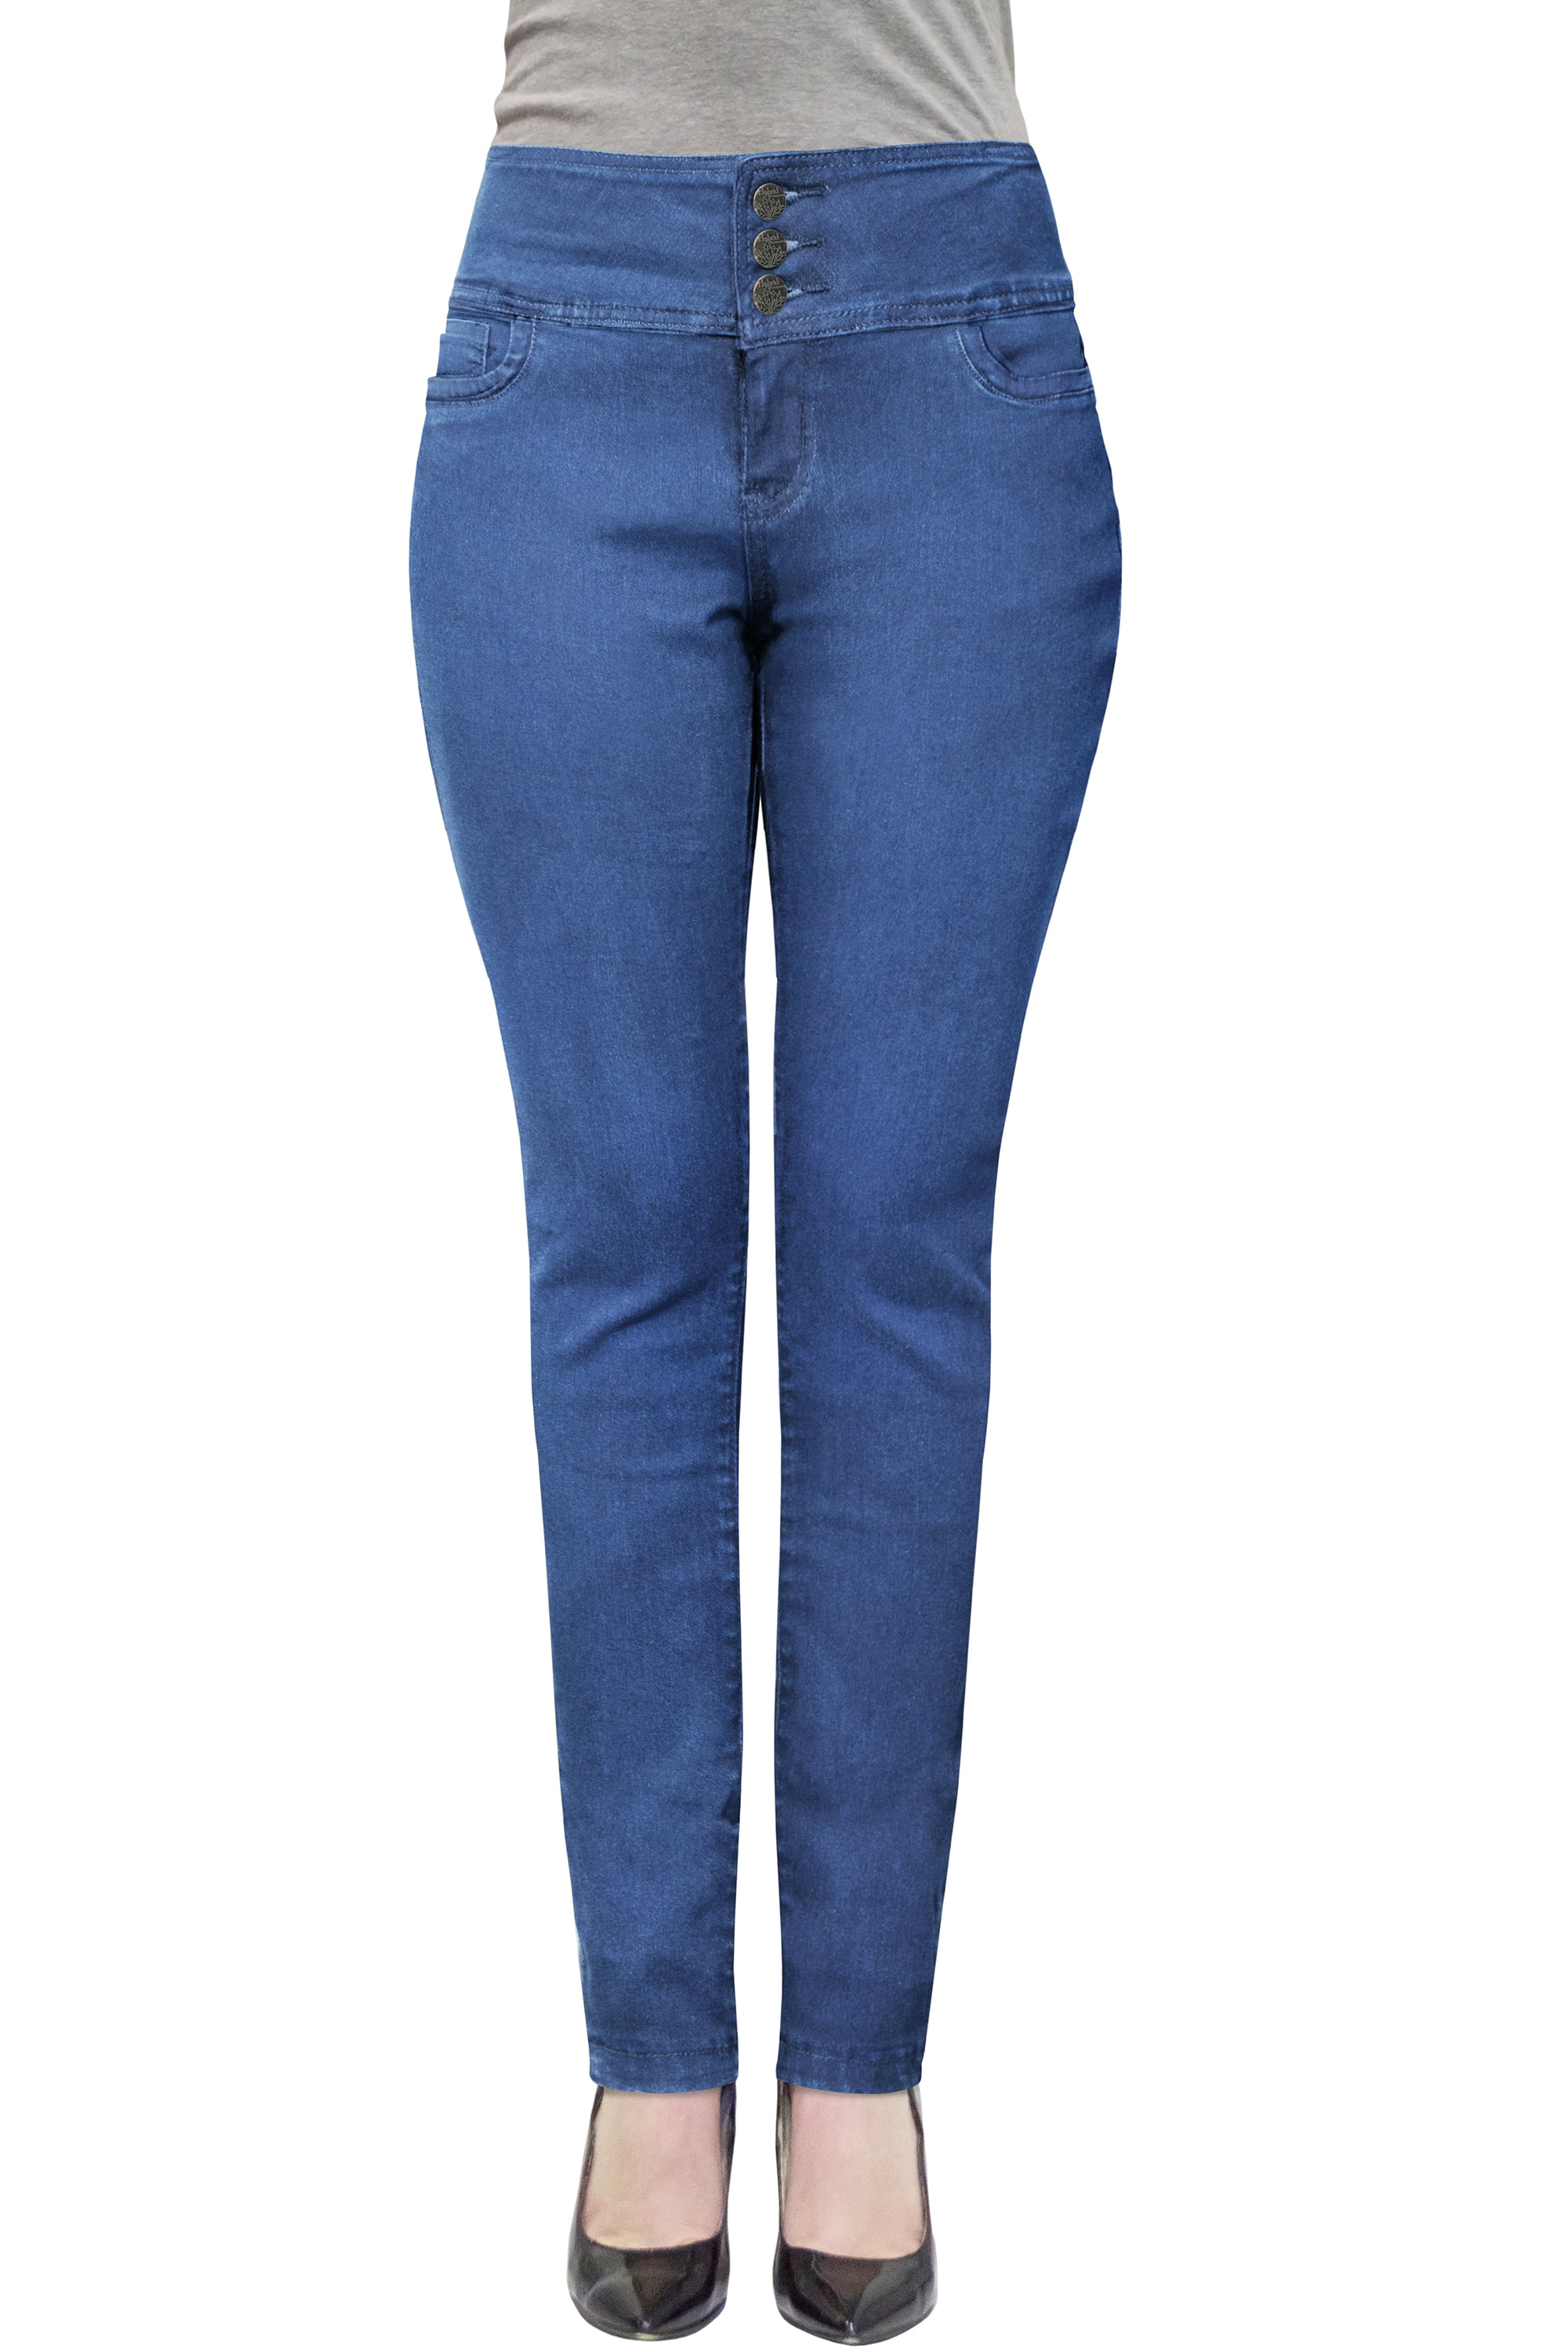 HyBrid & Company - Women's Butt Lift V3 Super Comfy Stretch Denim Jeans ...